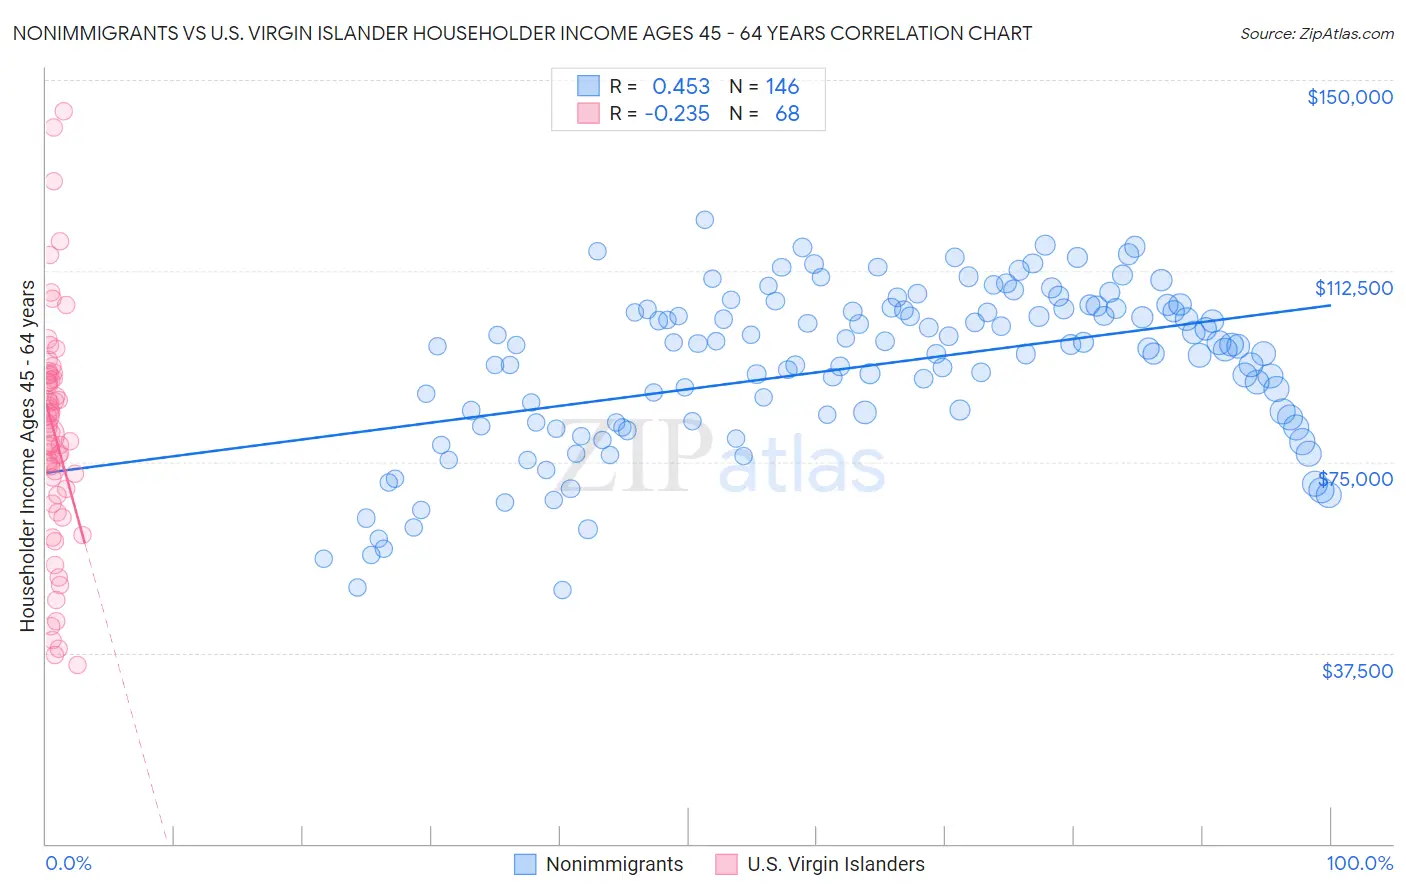 Nonimmigrants vs U.S. Virgin Islander Householder Income Ages 45 - 64 years